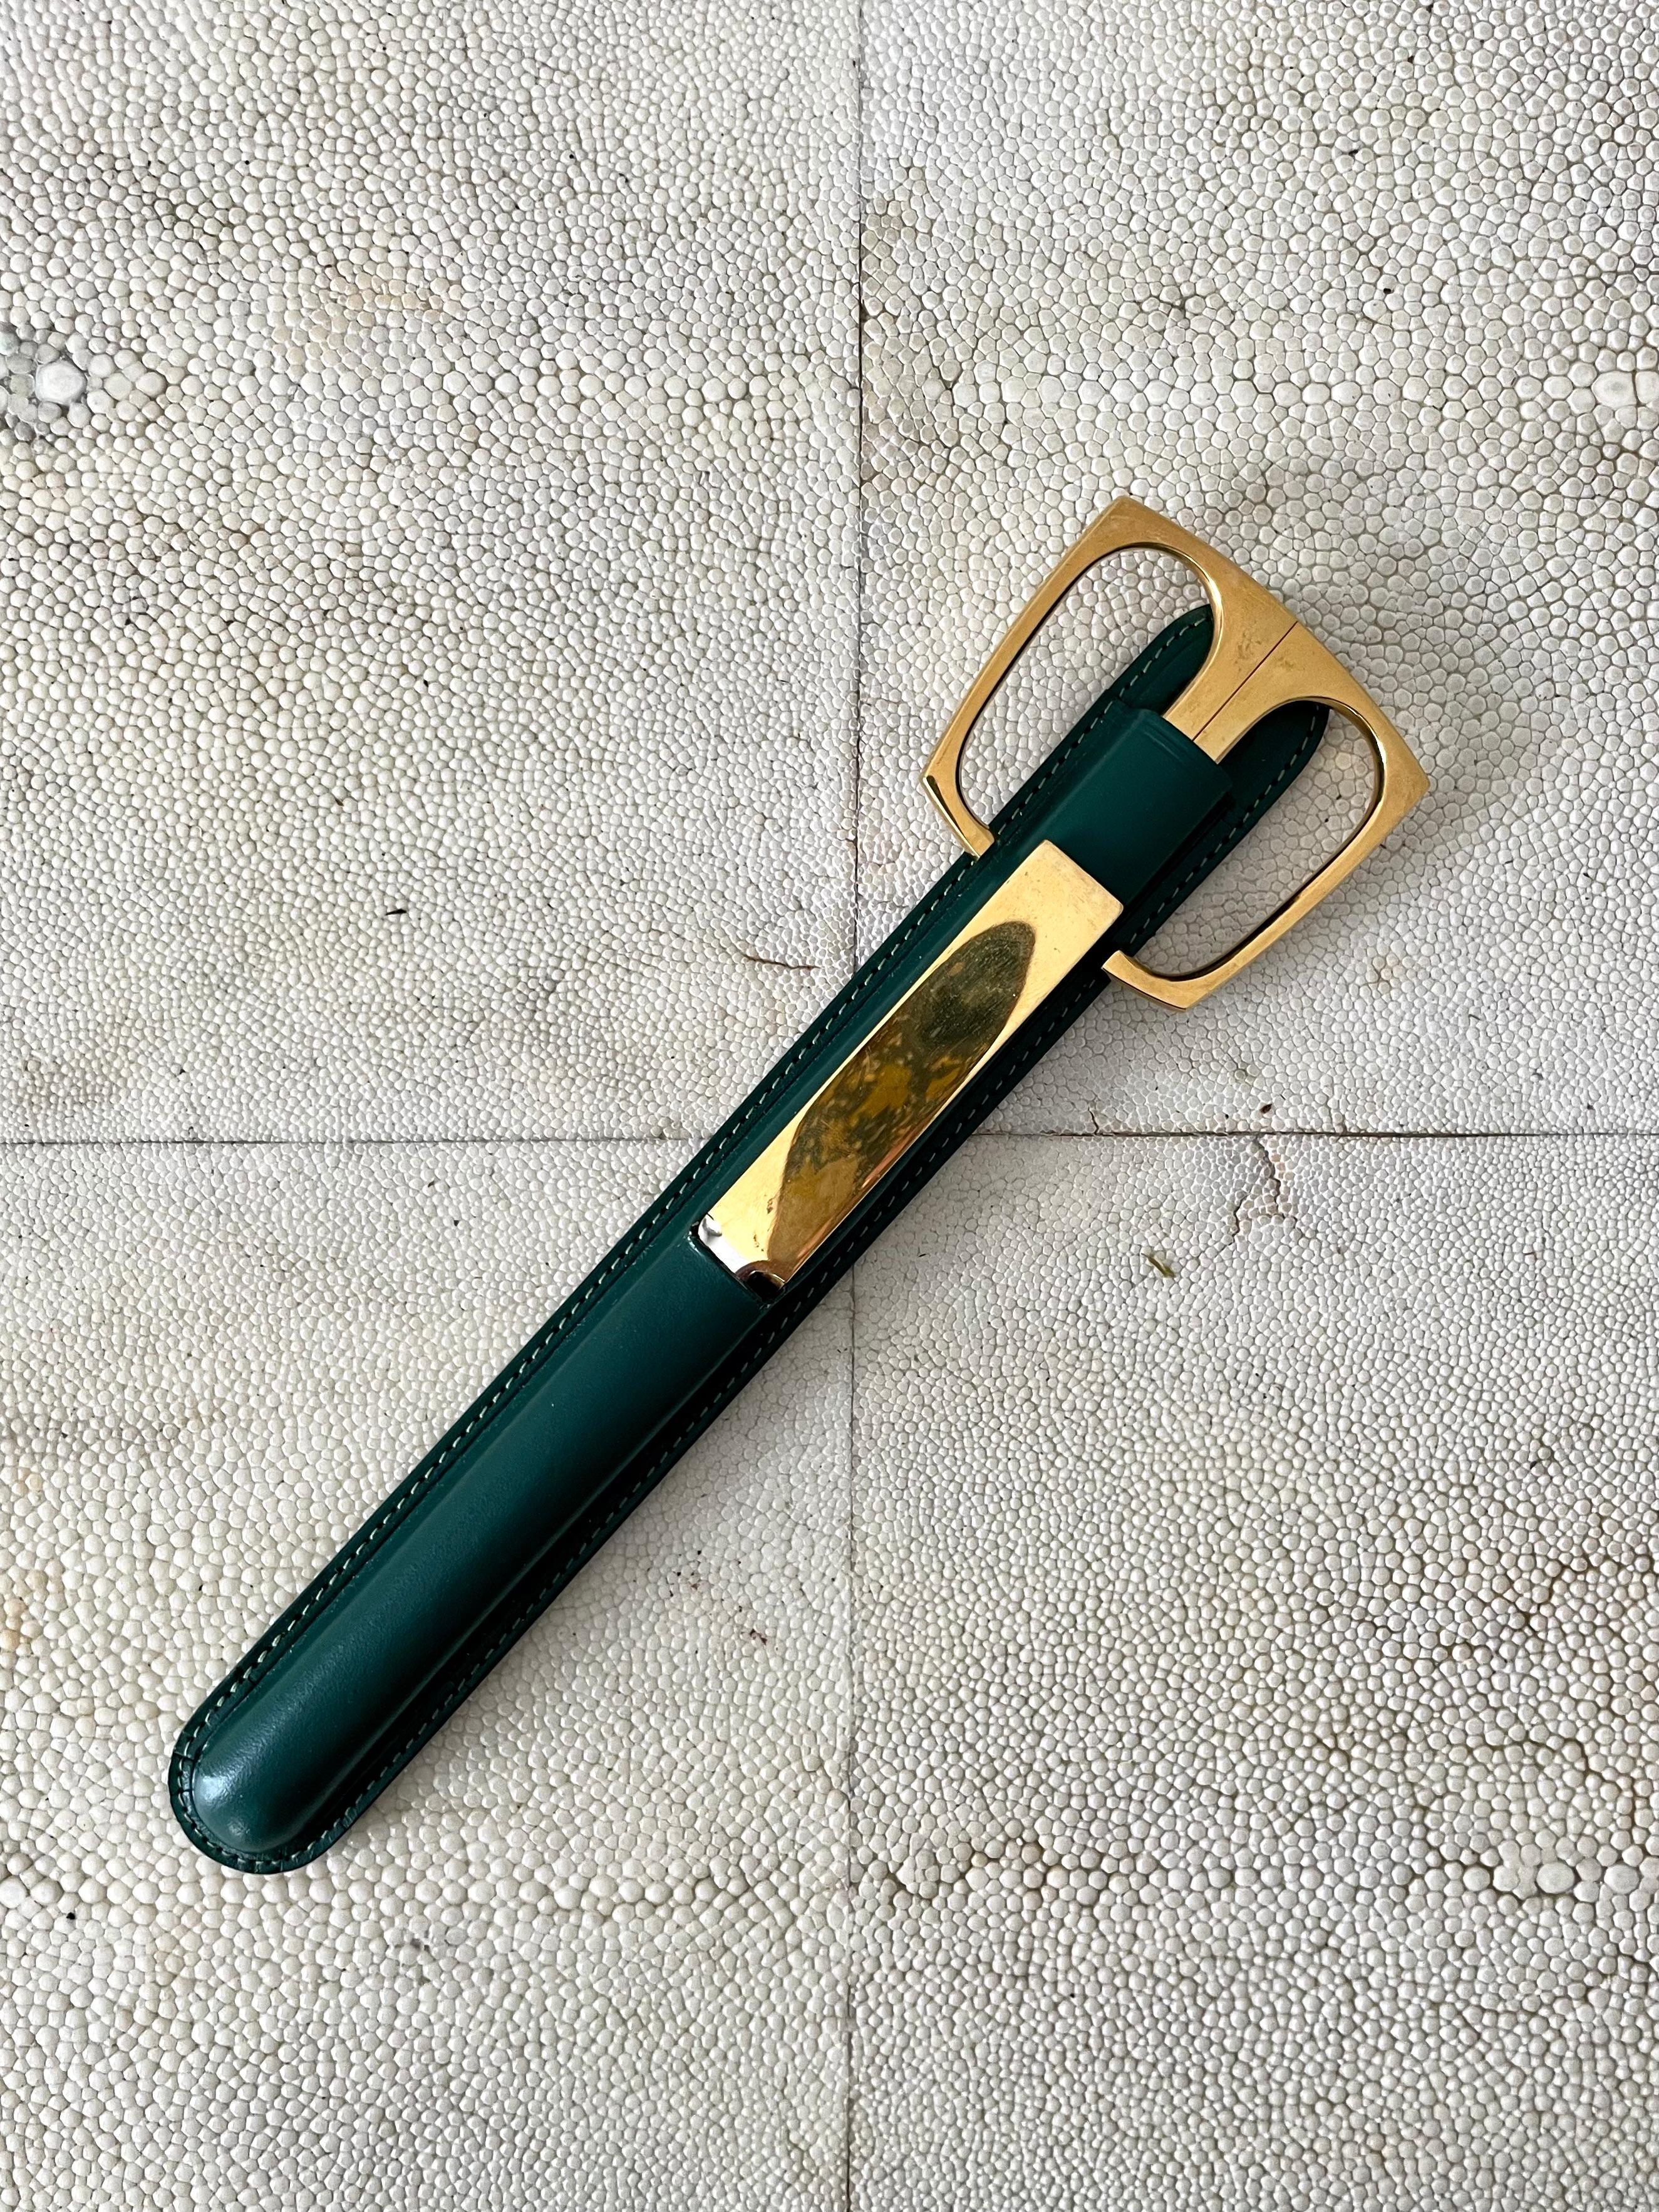 Solingen Scissors and Letter Opener in Green Leather Case 6